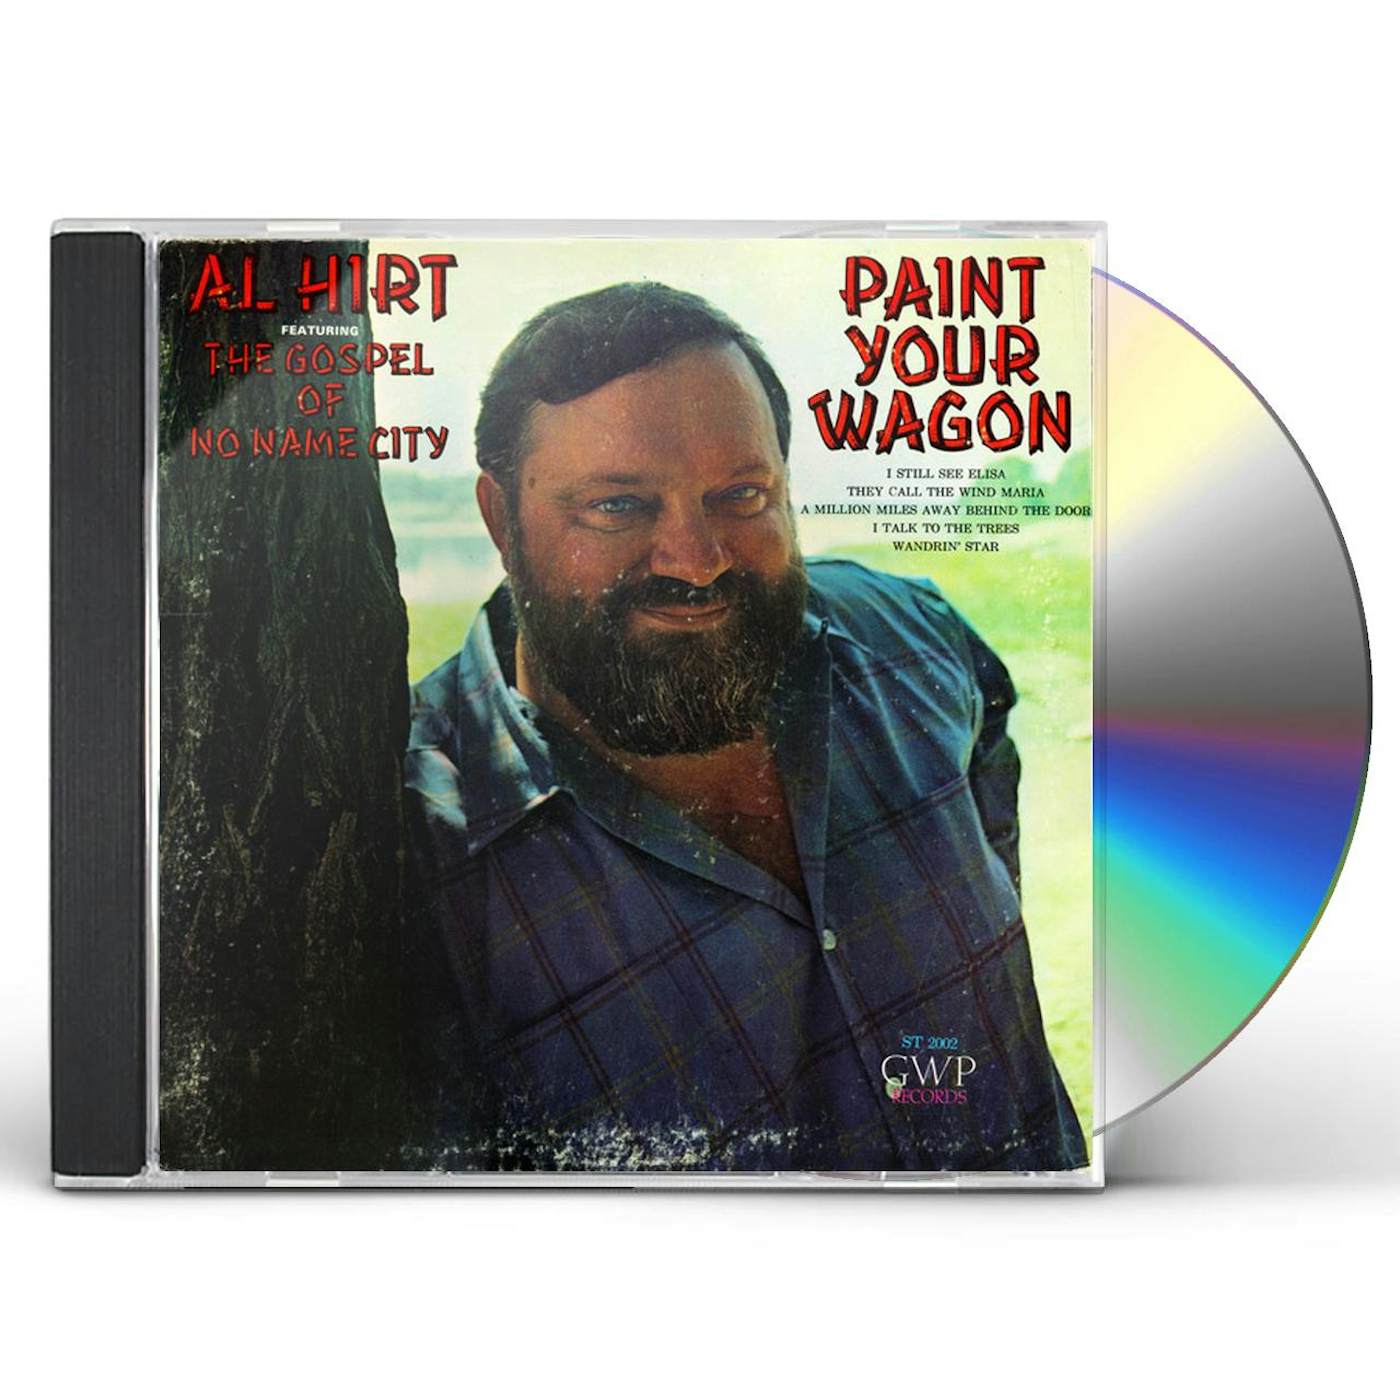 Al Hirt PAINT YOUR WAGON CD